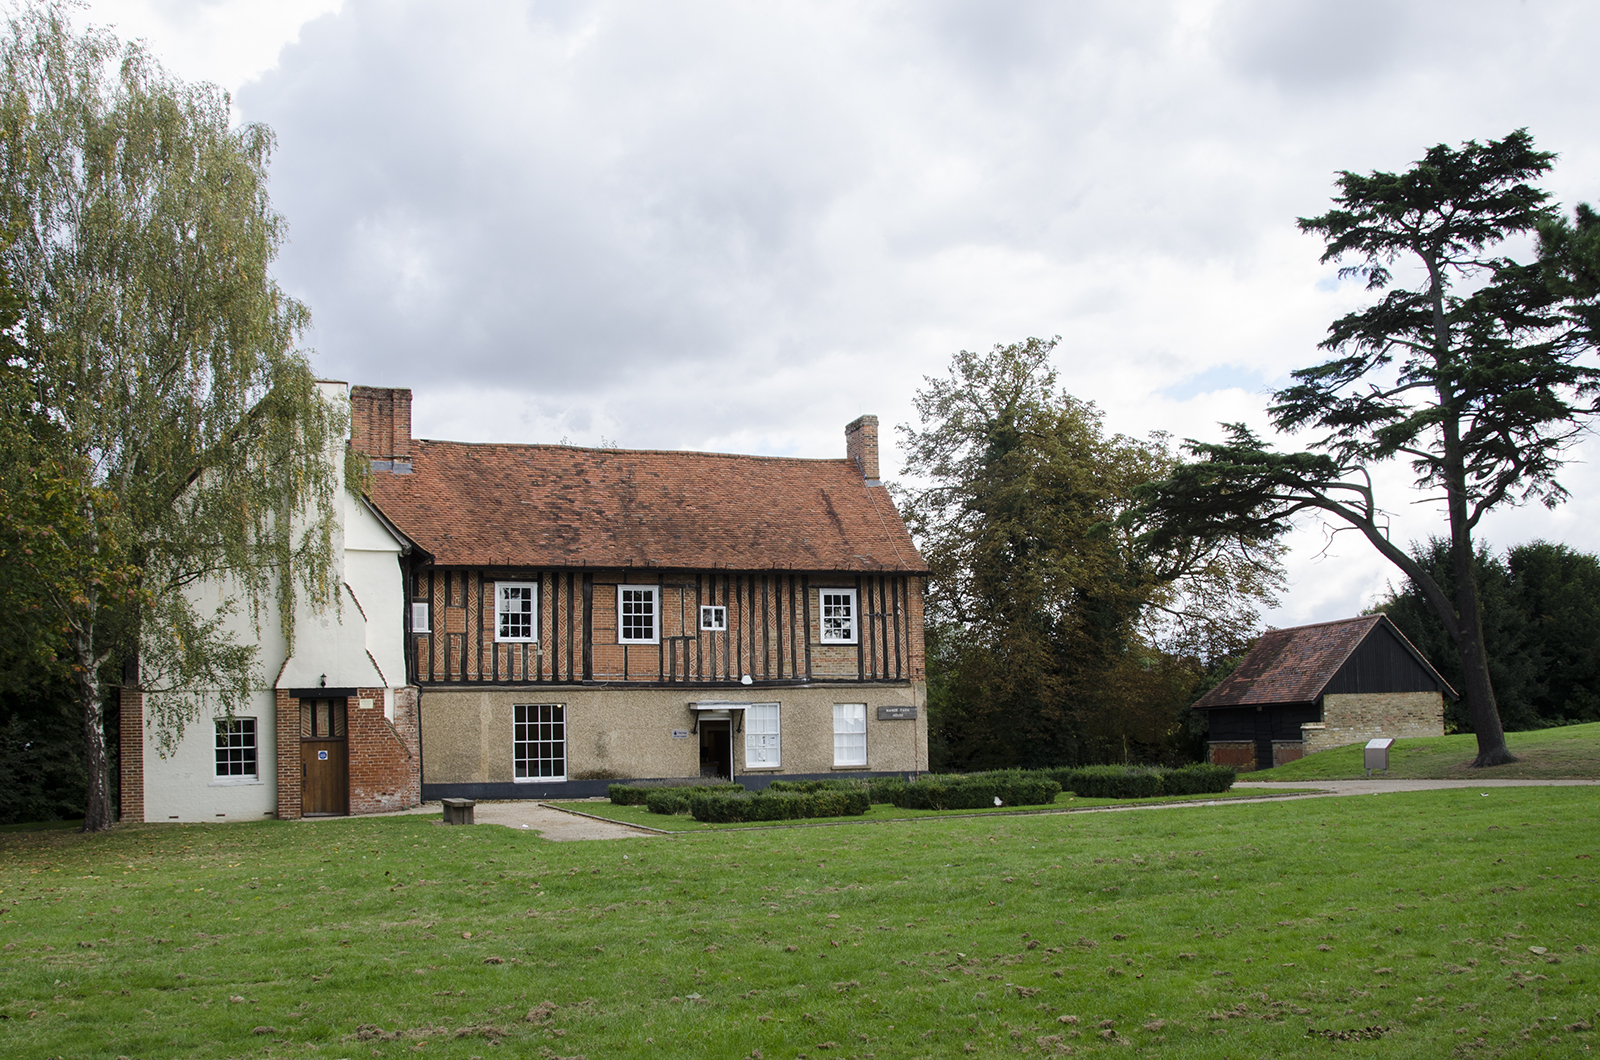 2016-10-13-Hillingdon_Manor-Farm-House_Autumn_Architecture